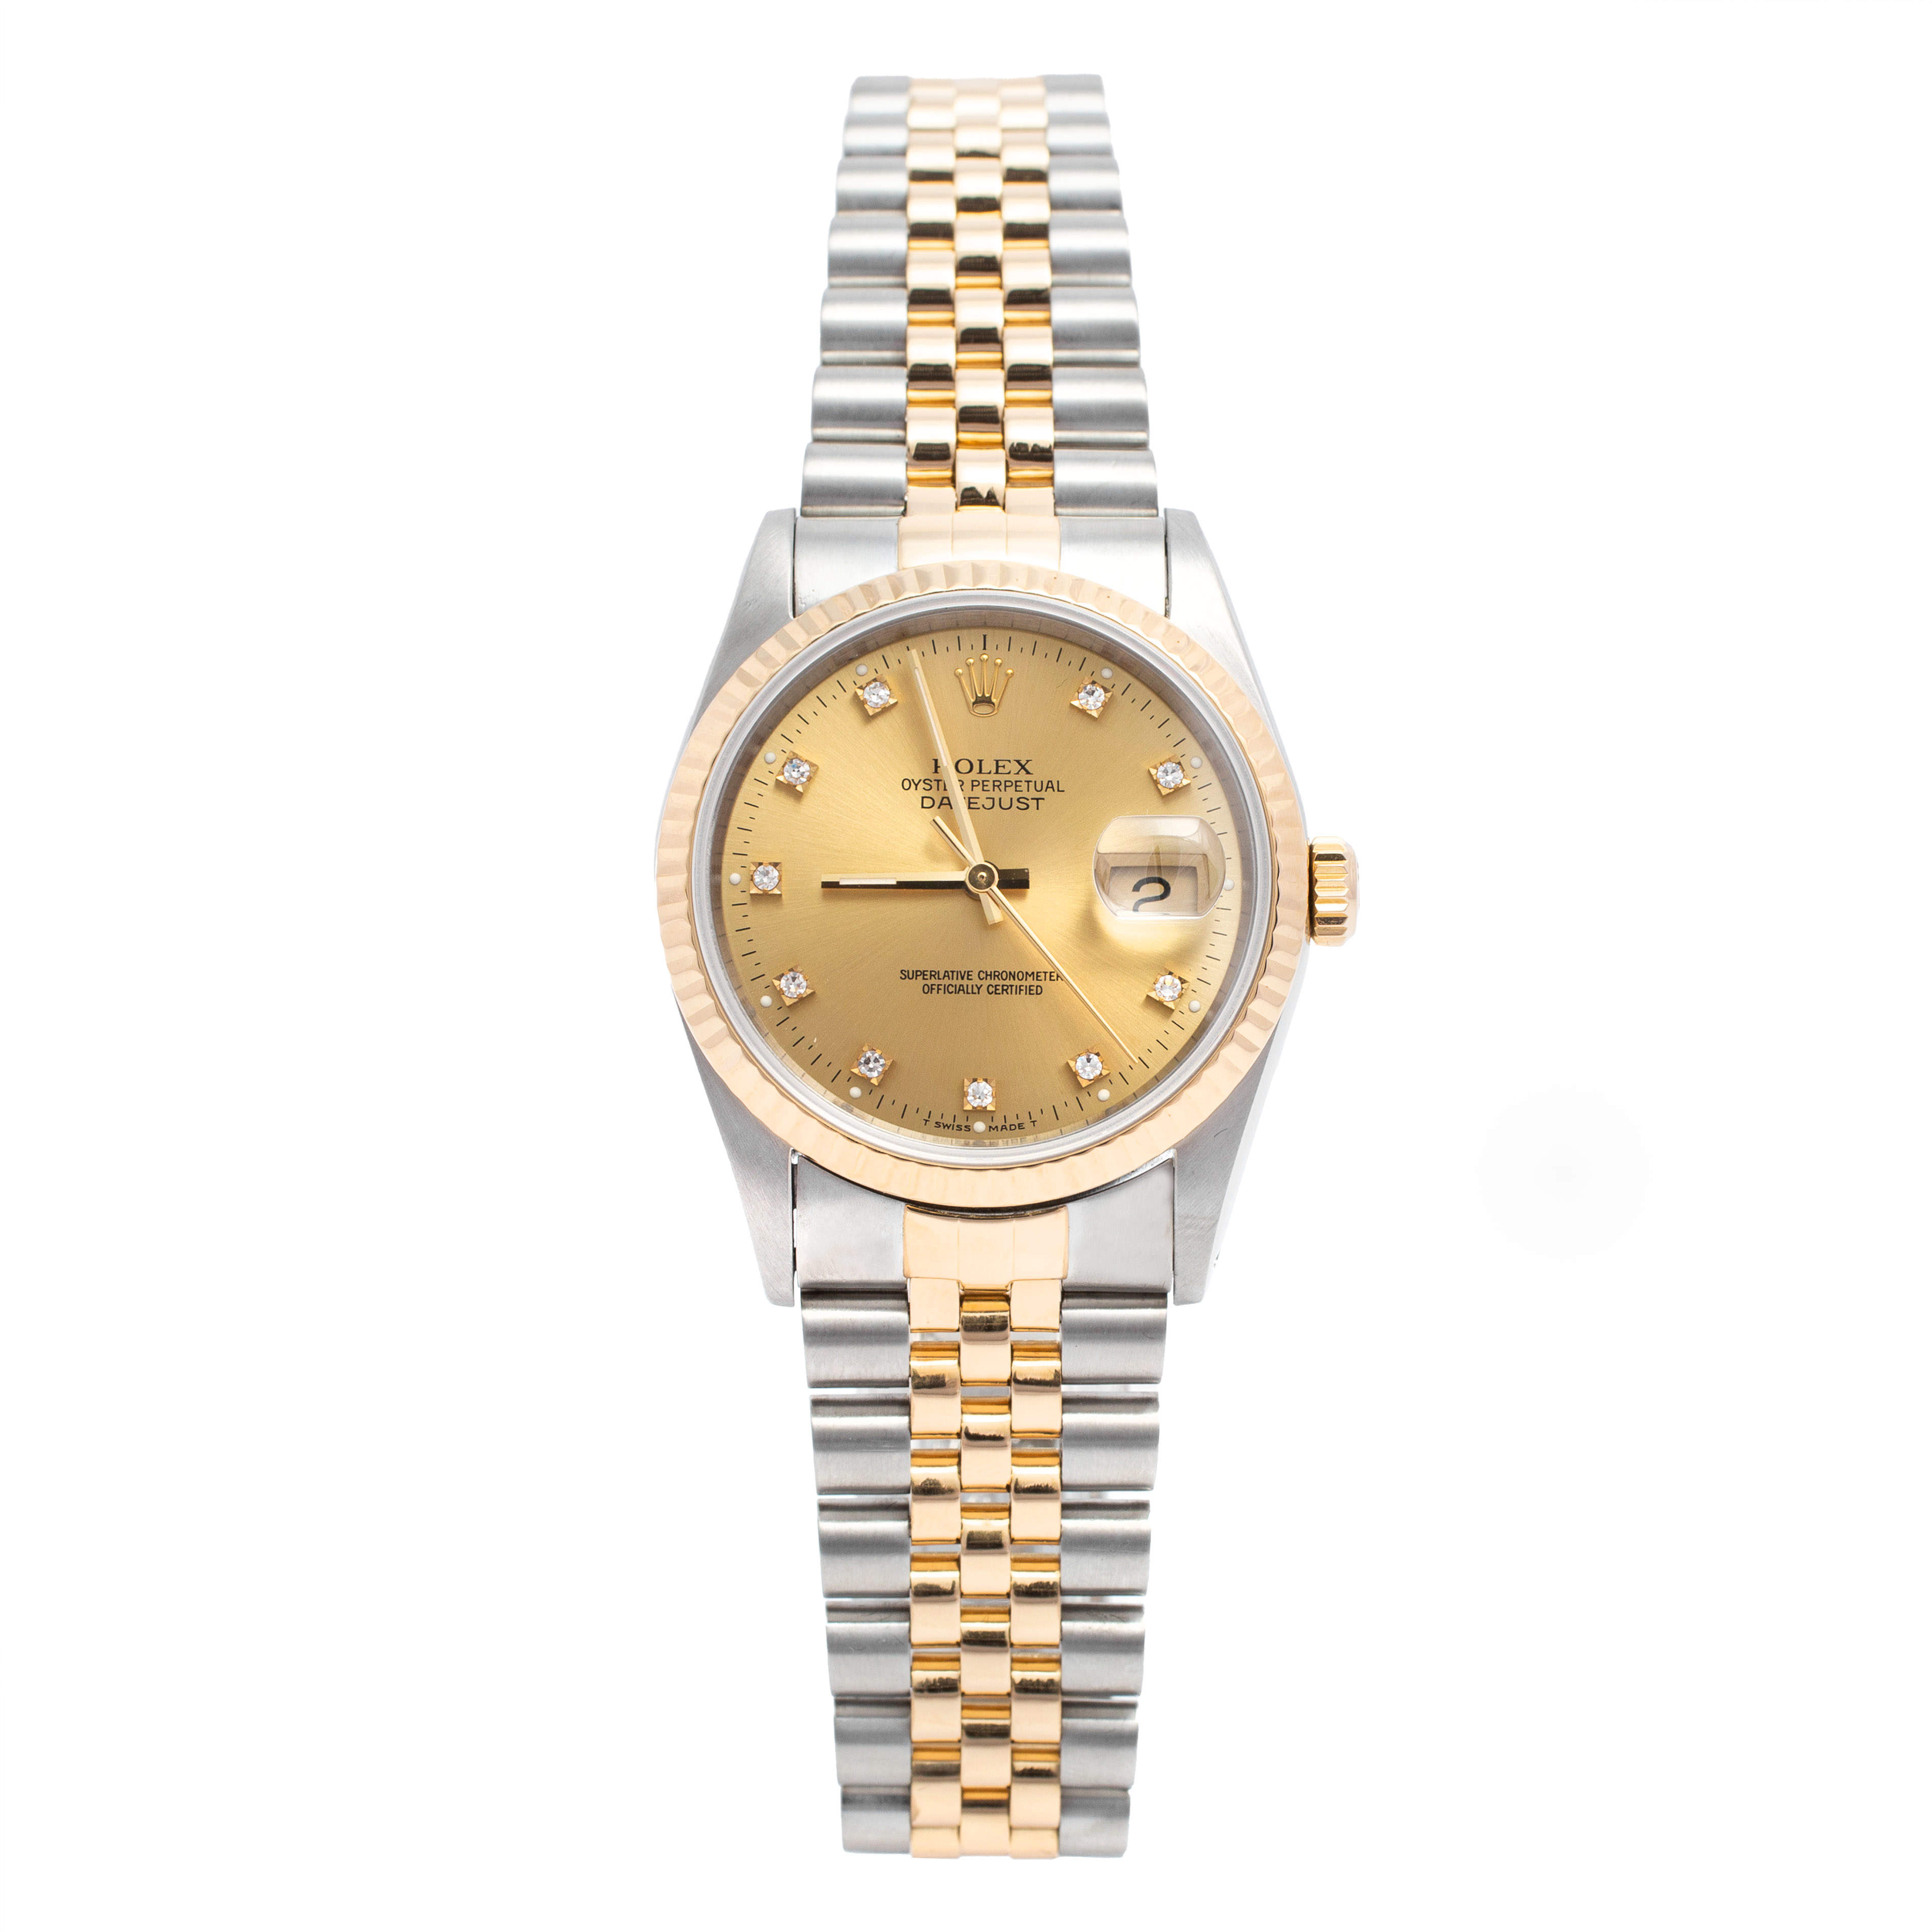 Rolex Champagne 18k Yellow Gold Stainless Steel Diamonds Datejust 16233 Men's Wristwatch 36 mm